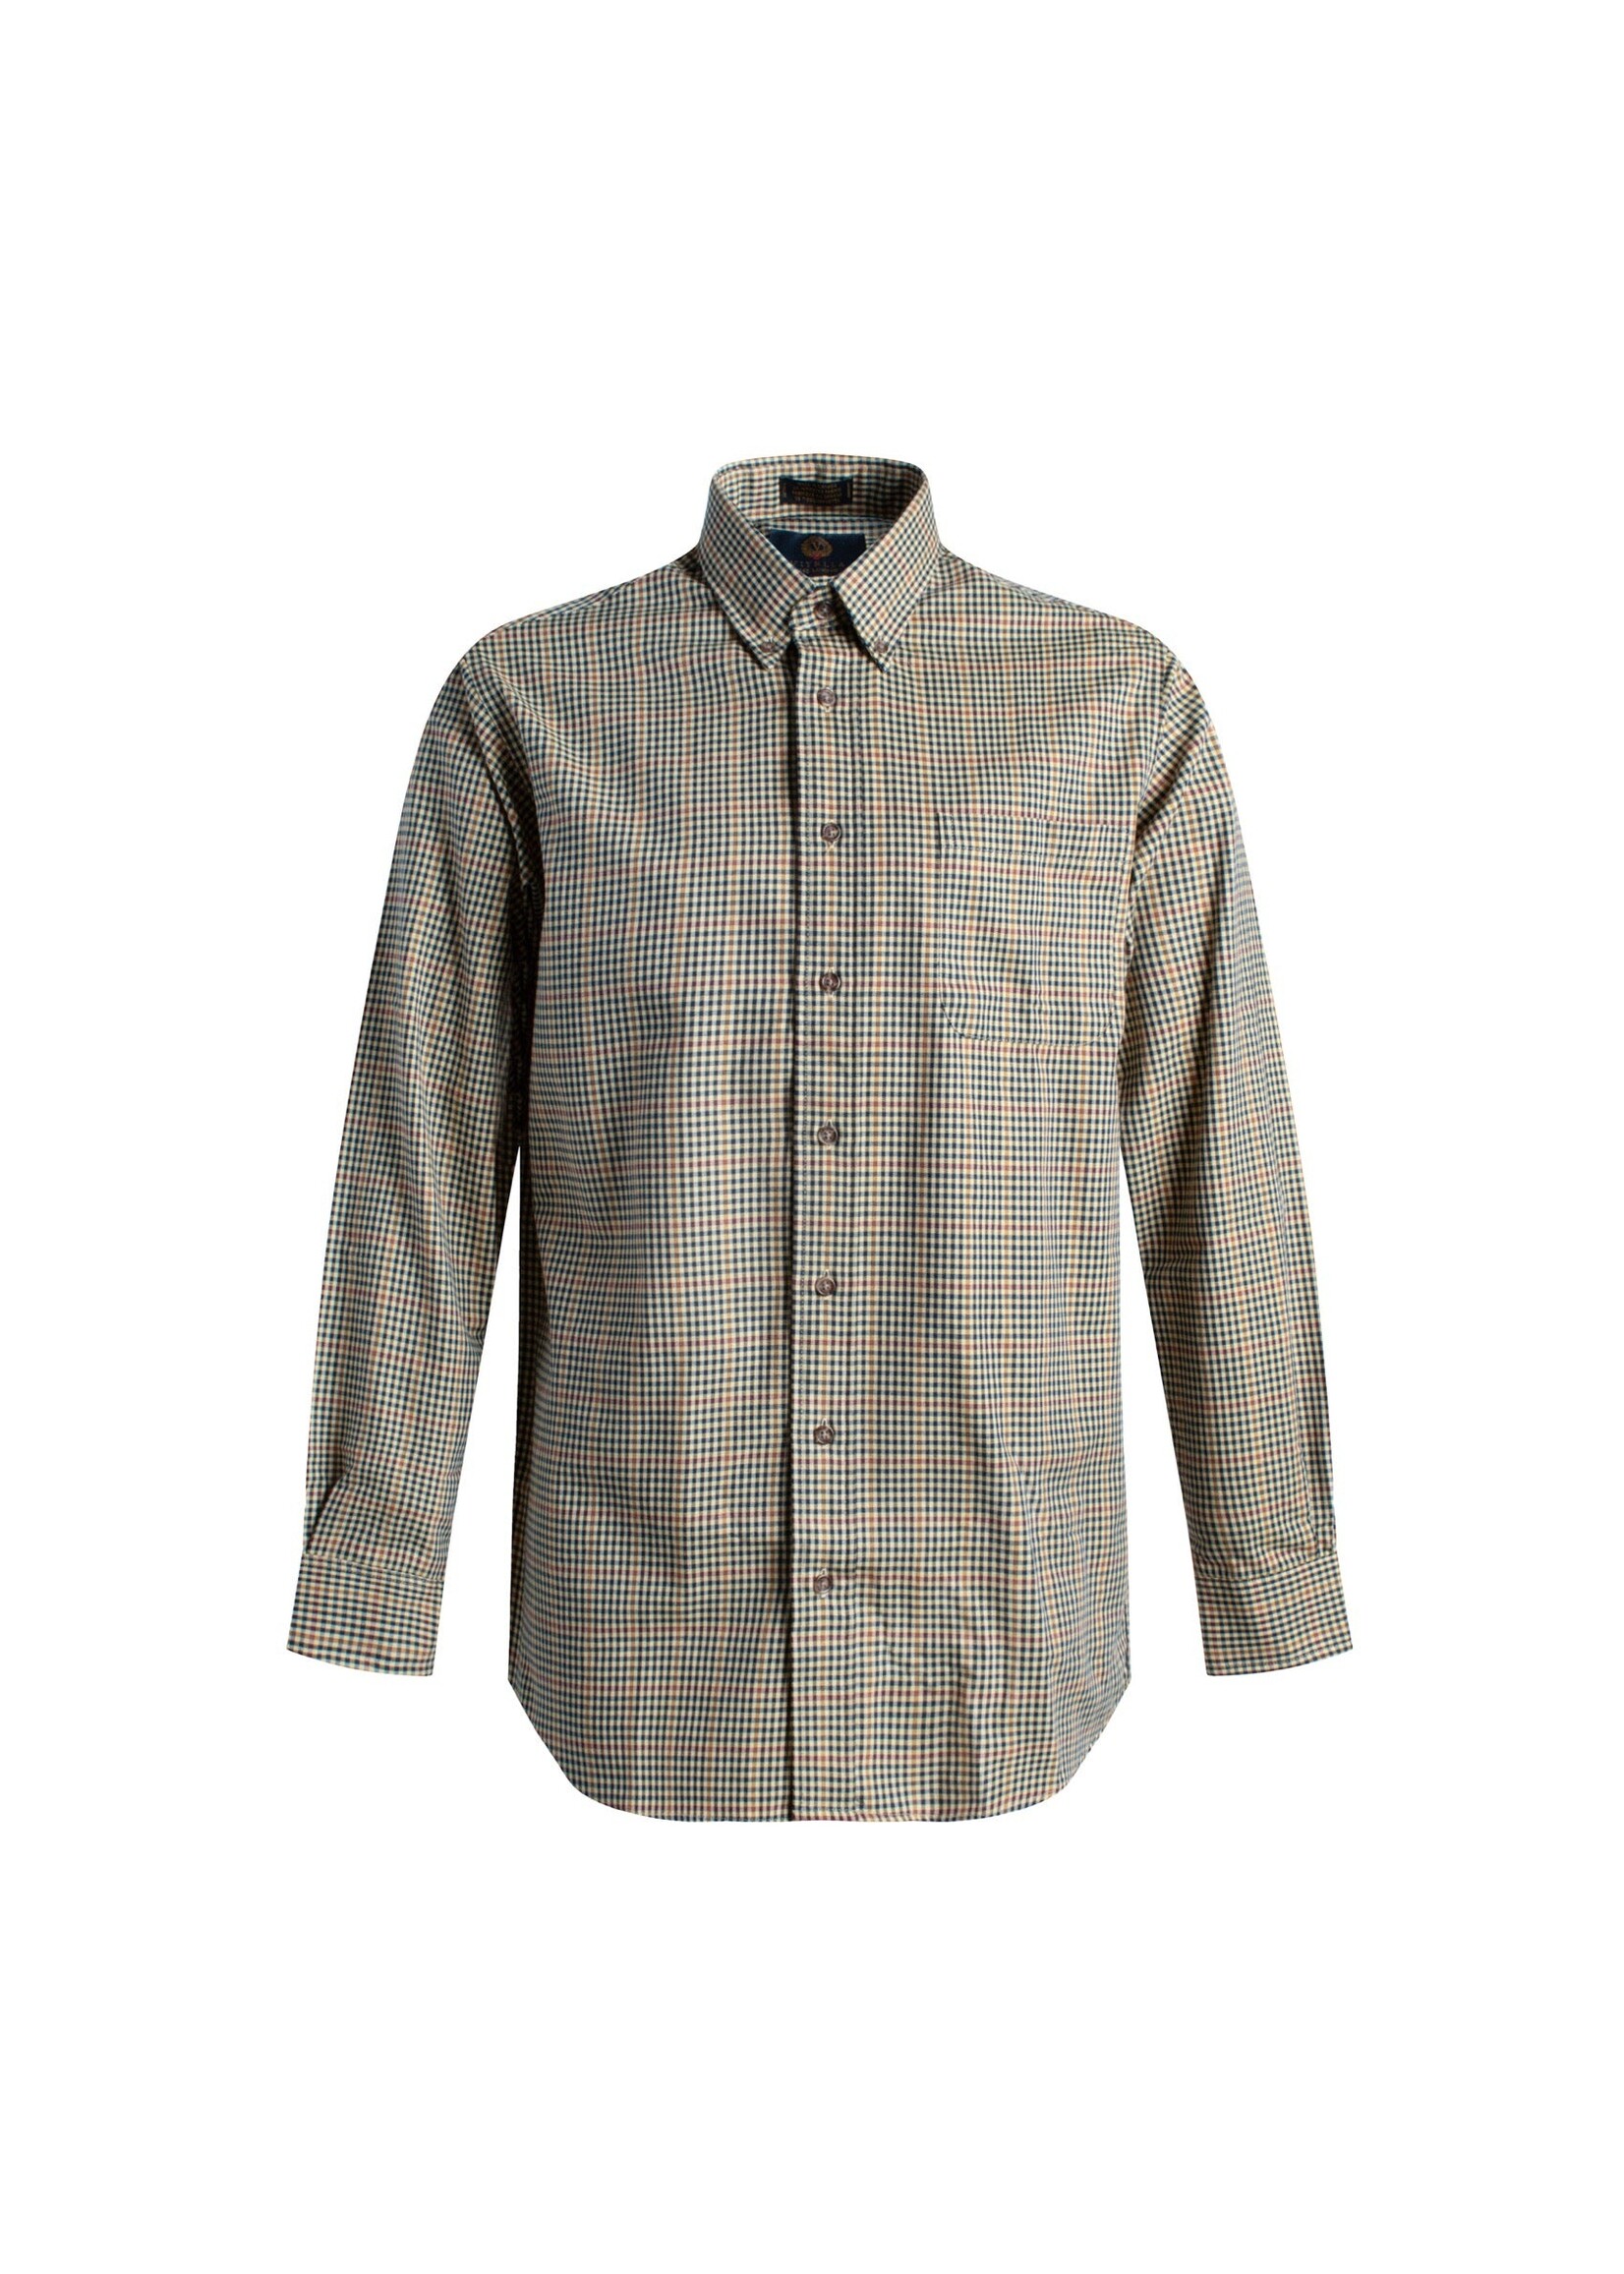 VIYELLA Tan and Navy Check Cotton and Wool Blend Button-Down Shirt